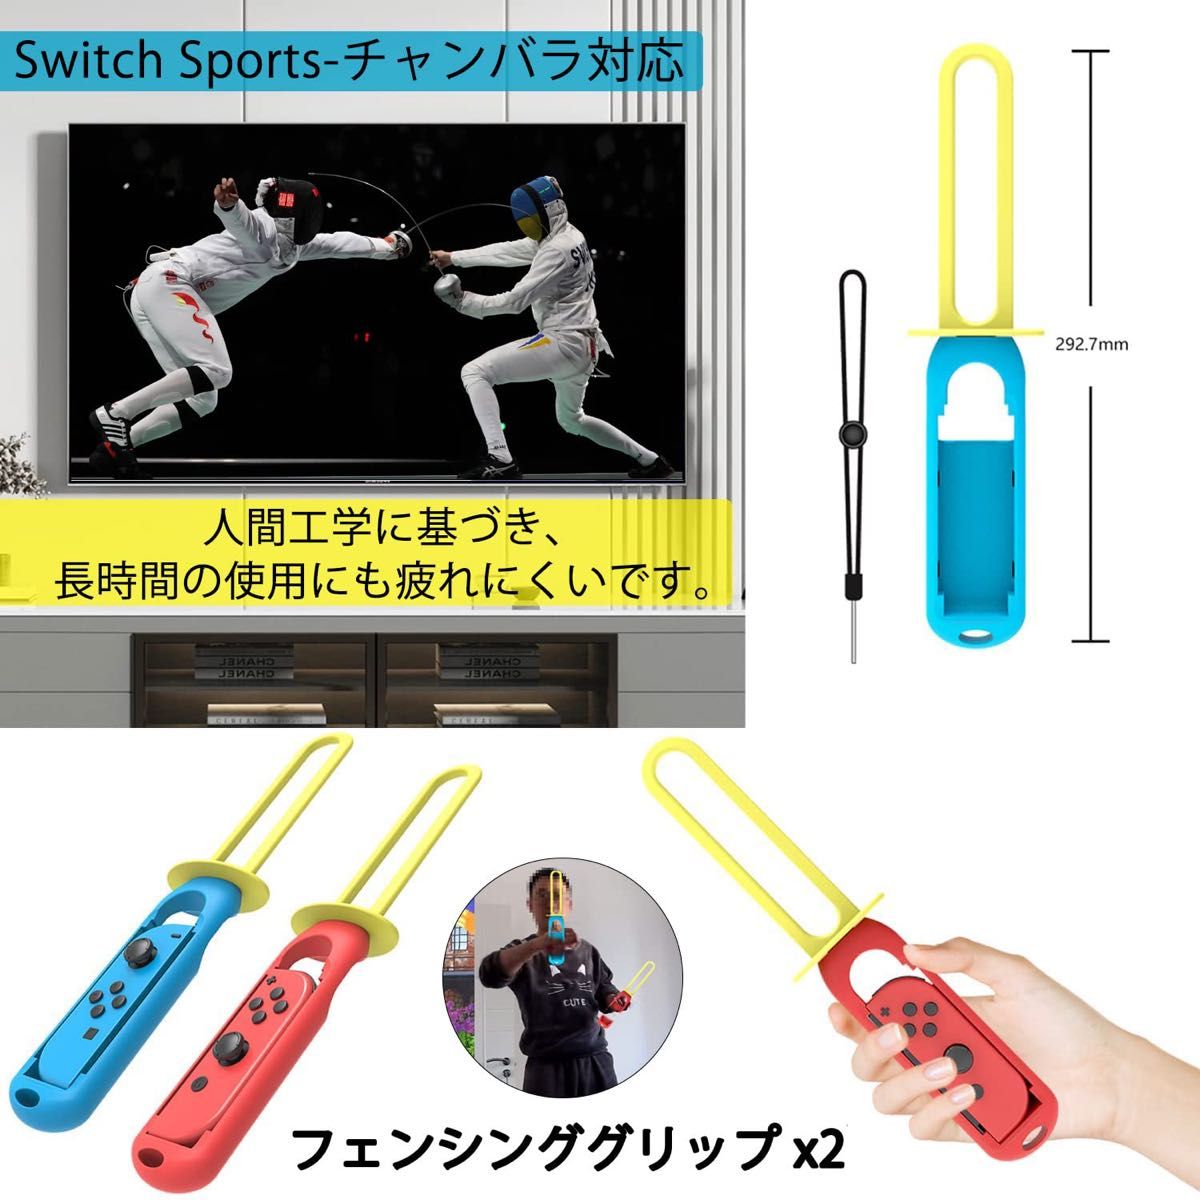 Switch Sports (ニンテンドースイッチスポーツ) 用アタッチメント スイッチ